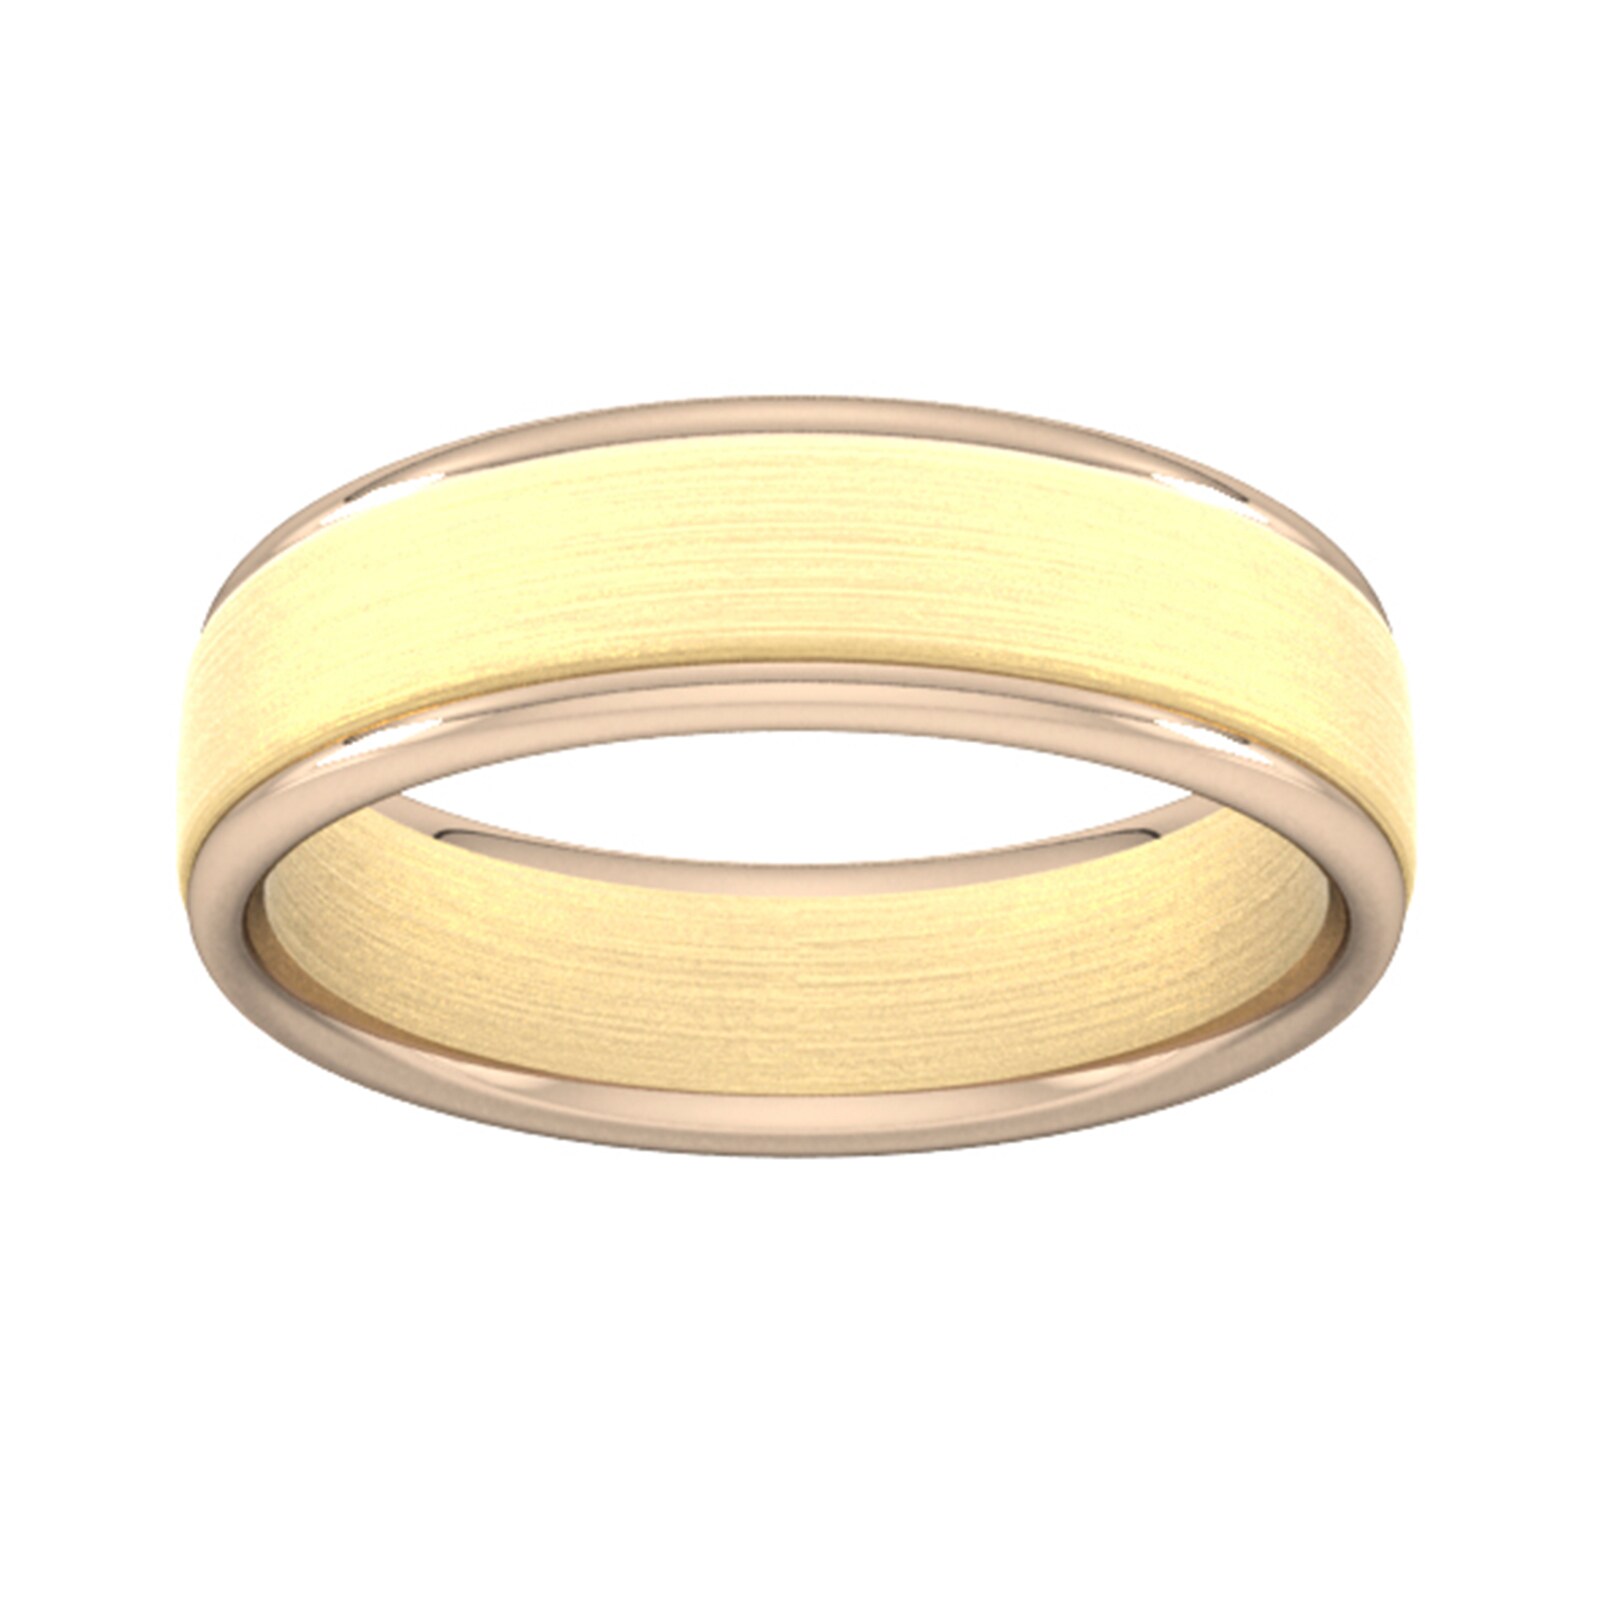 6mm Wedding Ring In 18 Carat Yellow & Rose Gold - Ring Size V